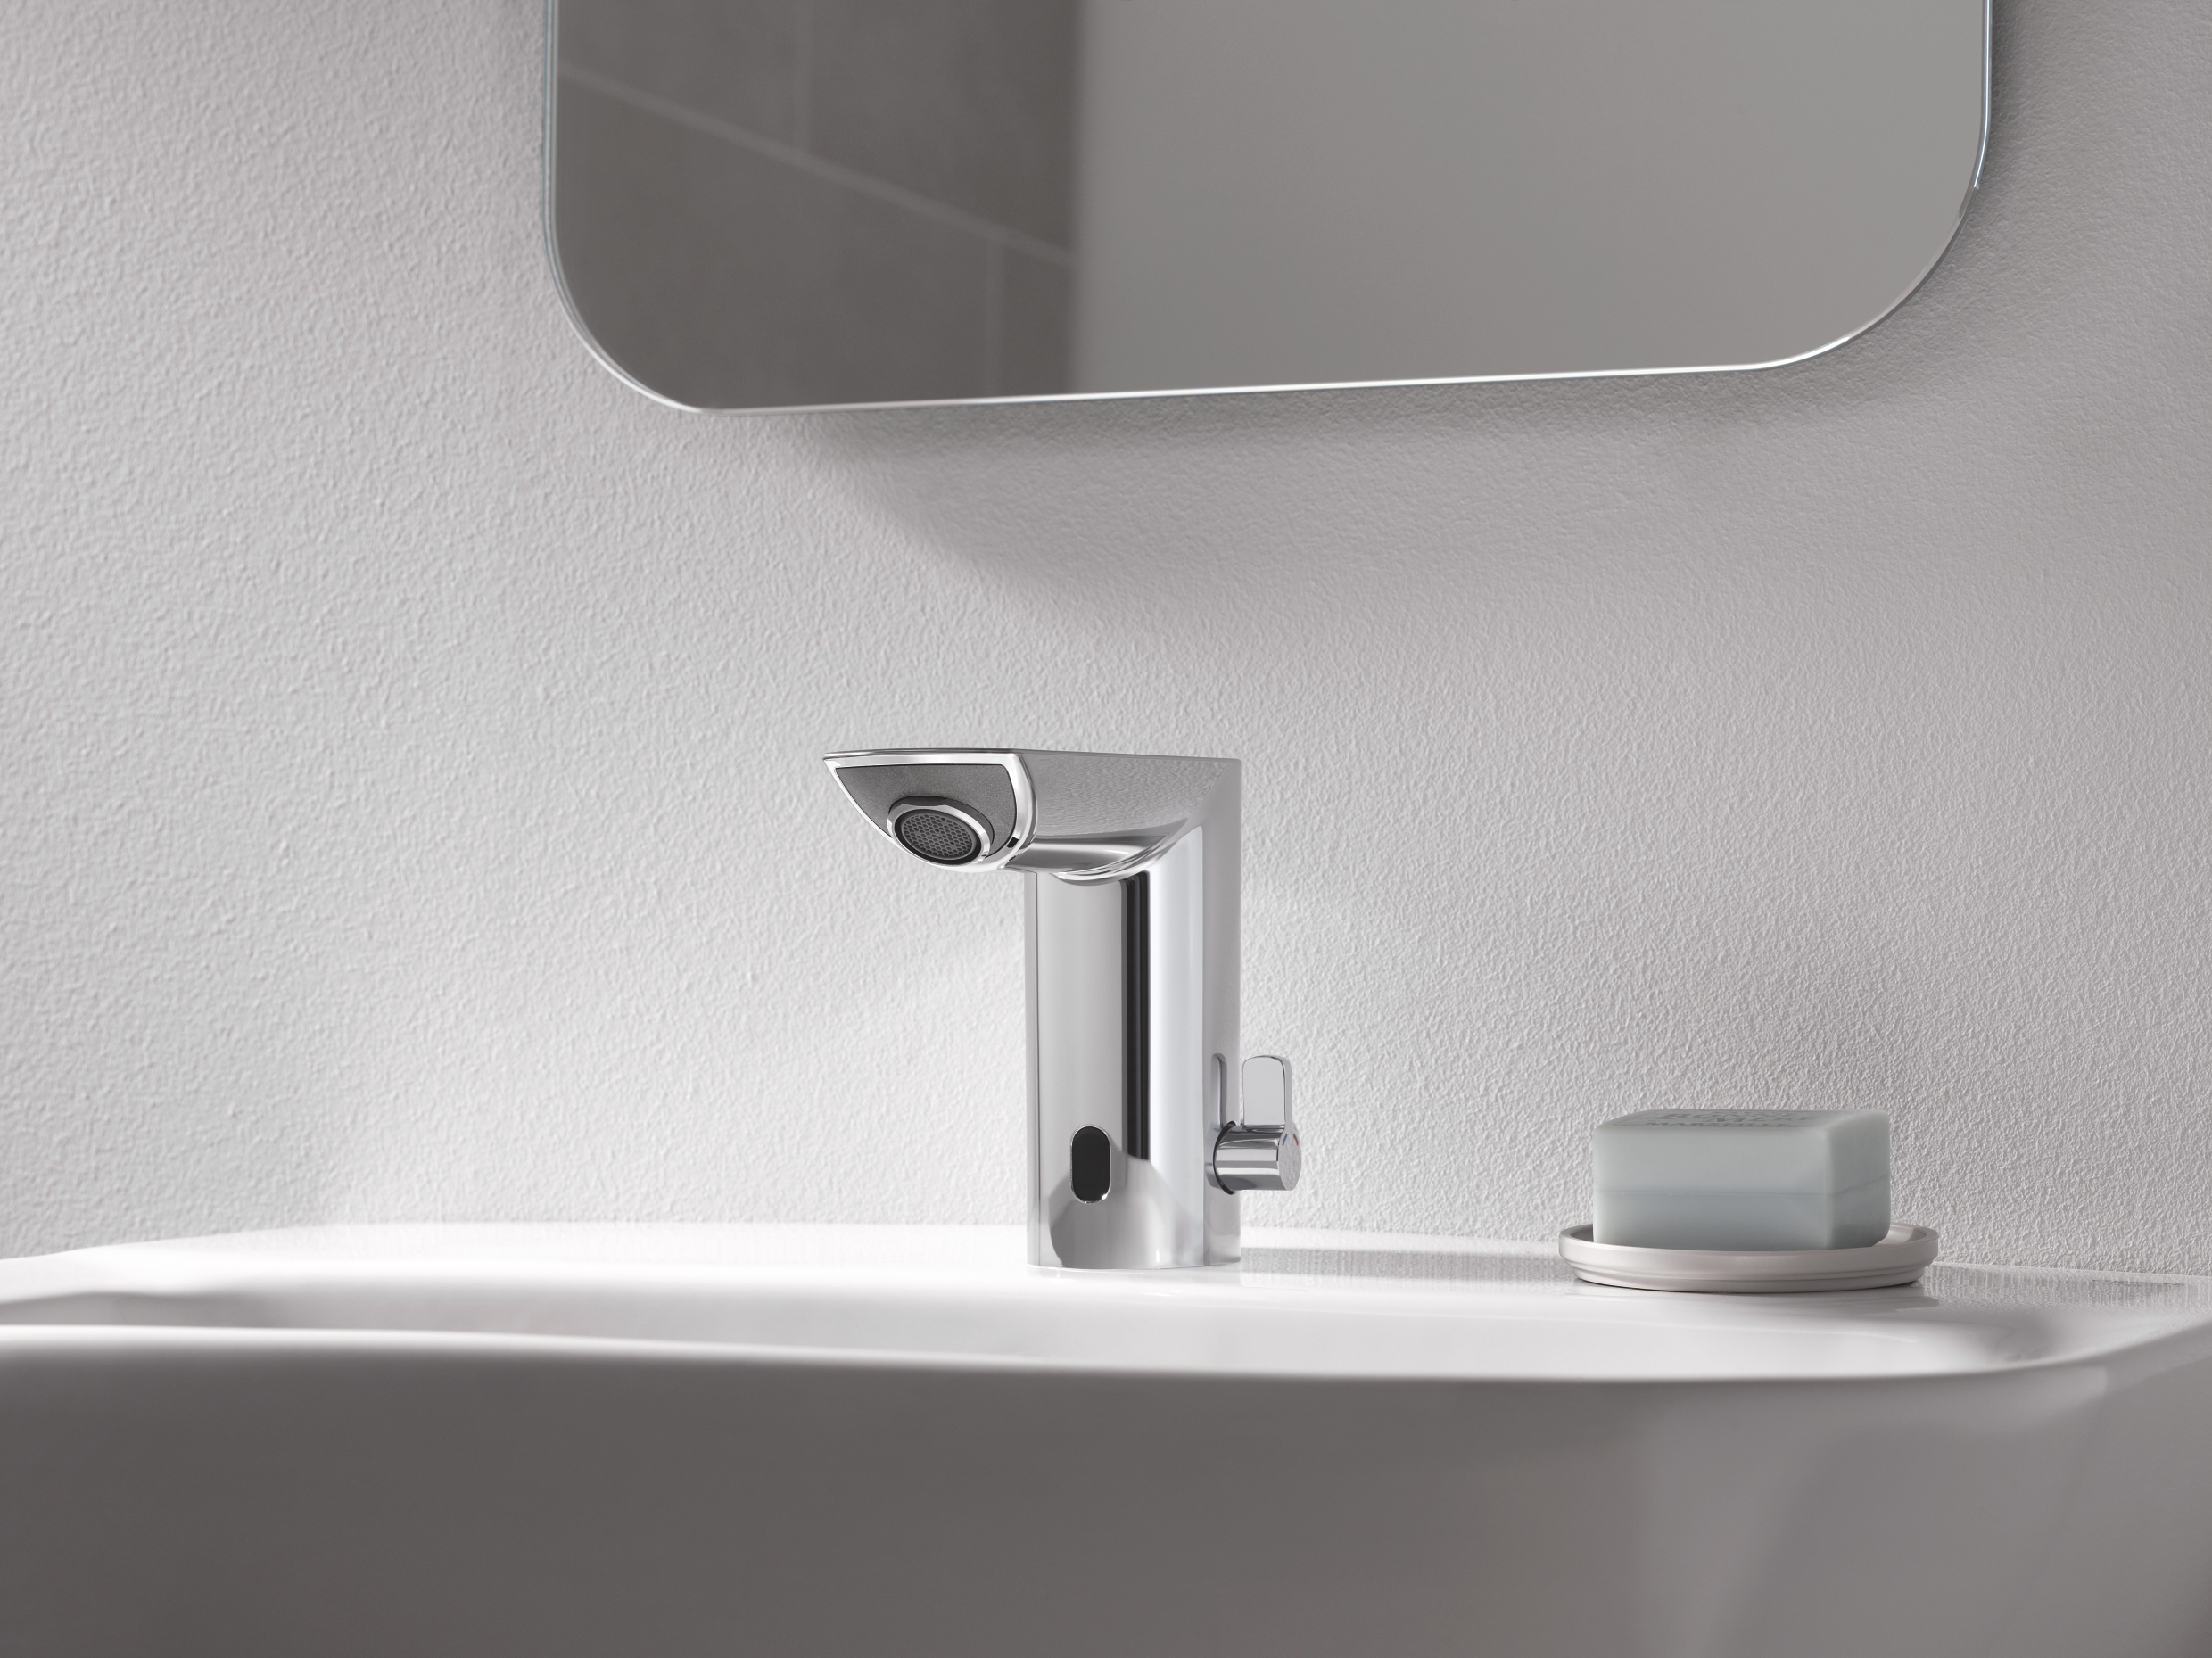 GROHE Bau Cosmopolitan E infra-red bathroom tap wins Gold Award at Designer Kitchen & Bathroom Awards 2020 @GroheUK